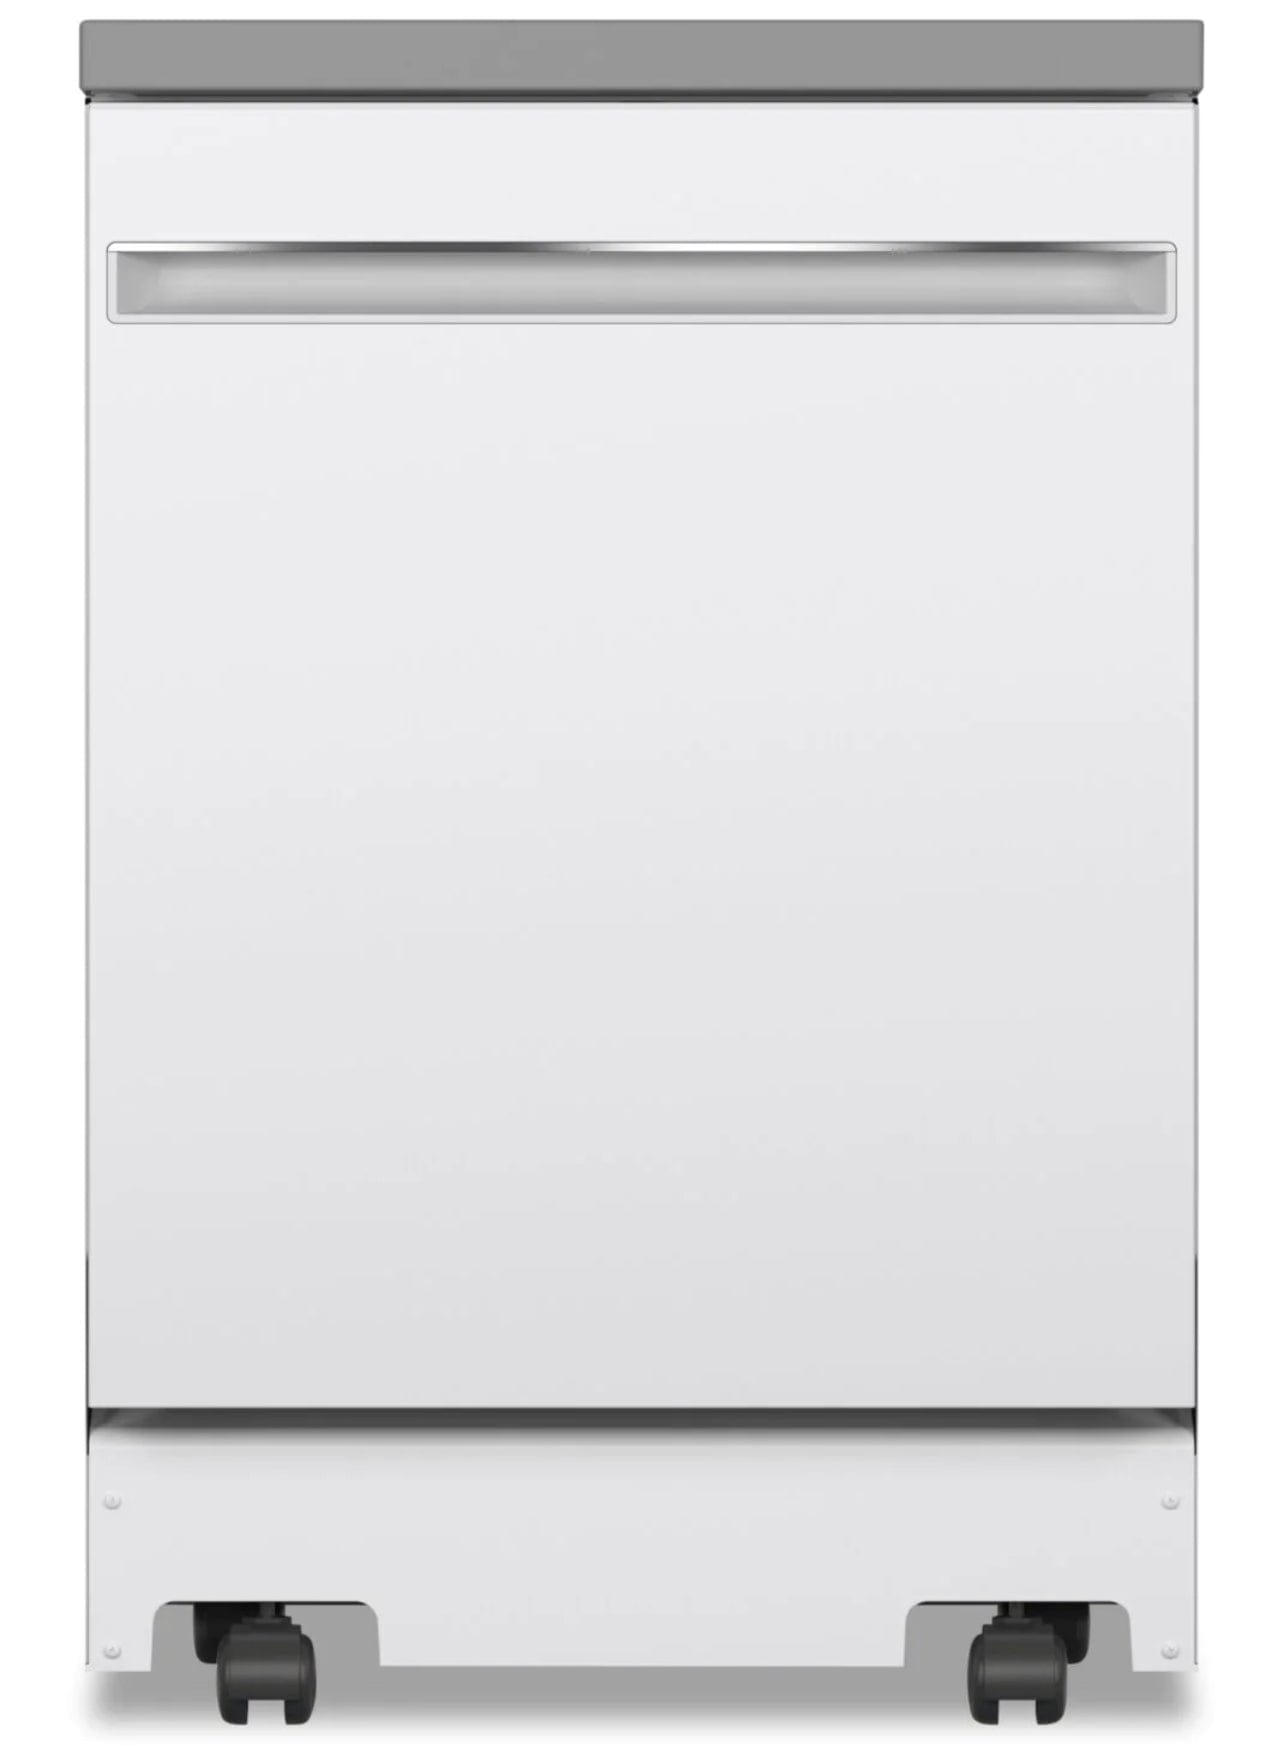 GE Appliances GPT225SSLSS 24 Portable Dishwasher - Stainless Steel